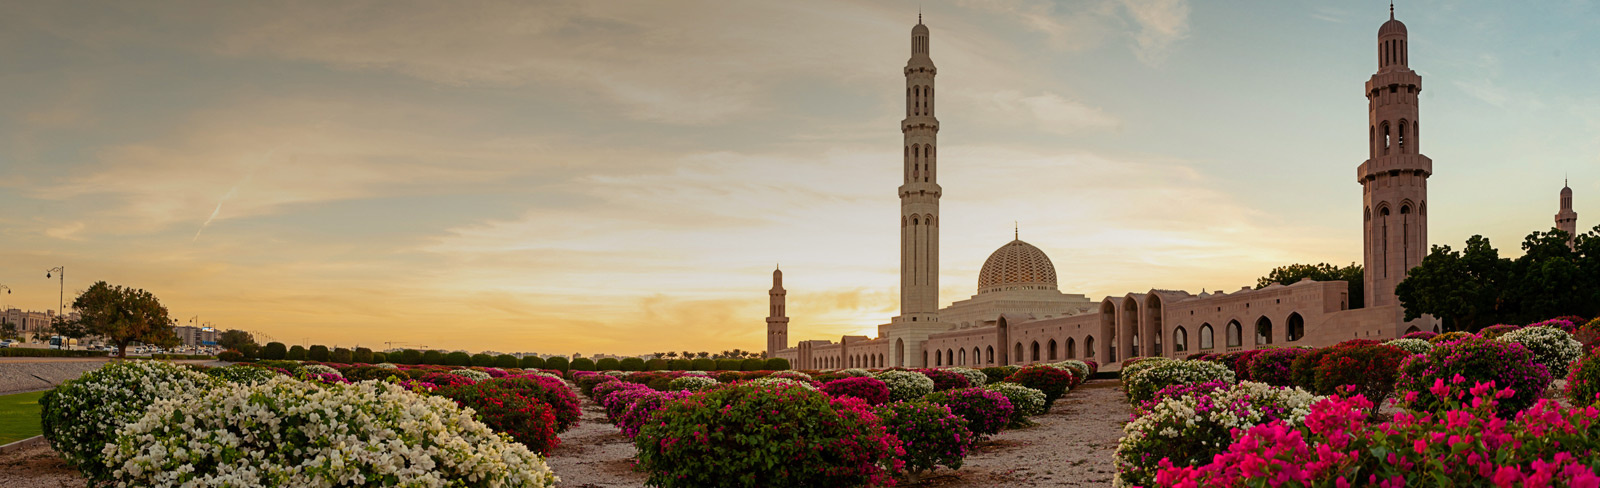 Image of Oman skyline